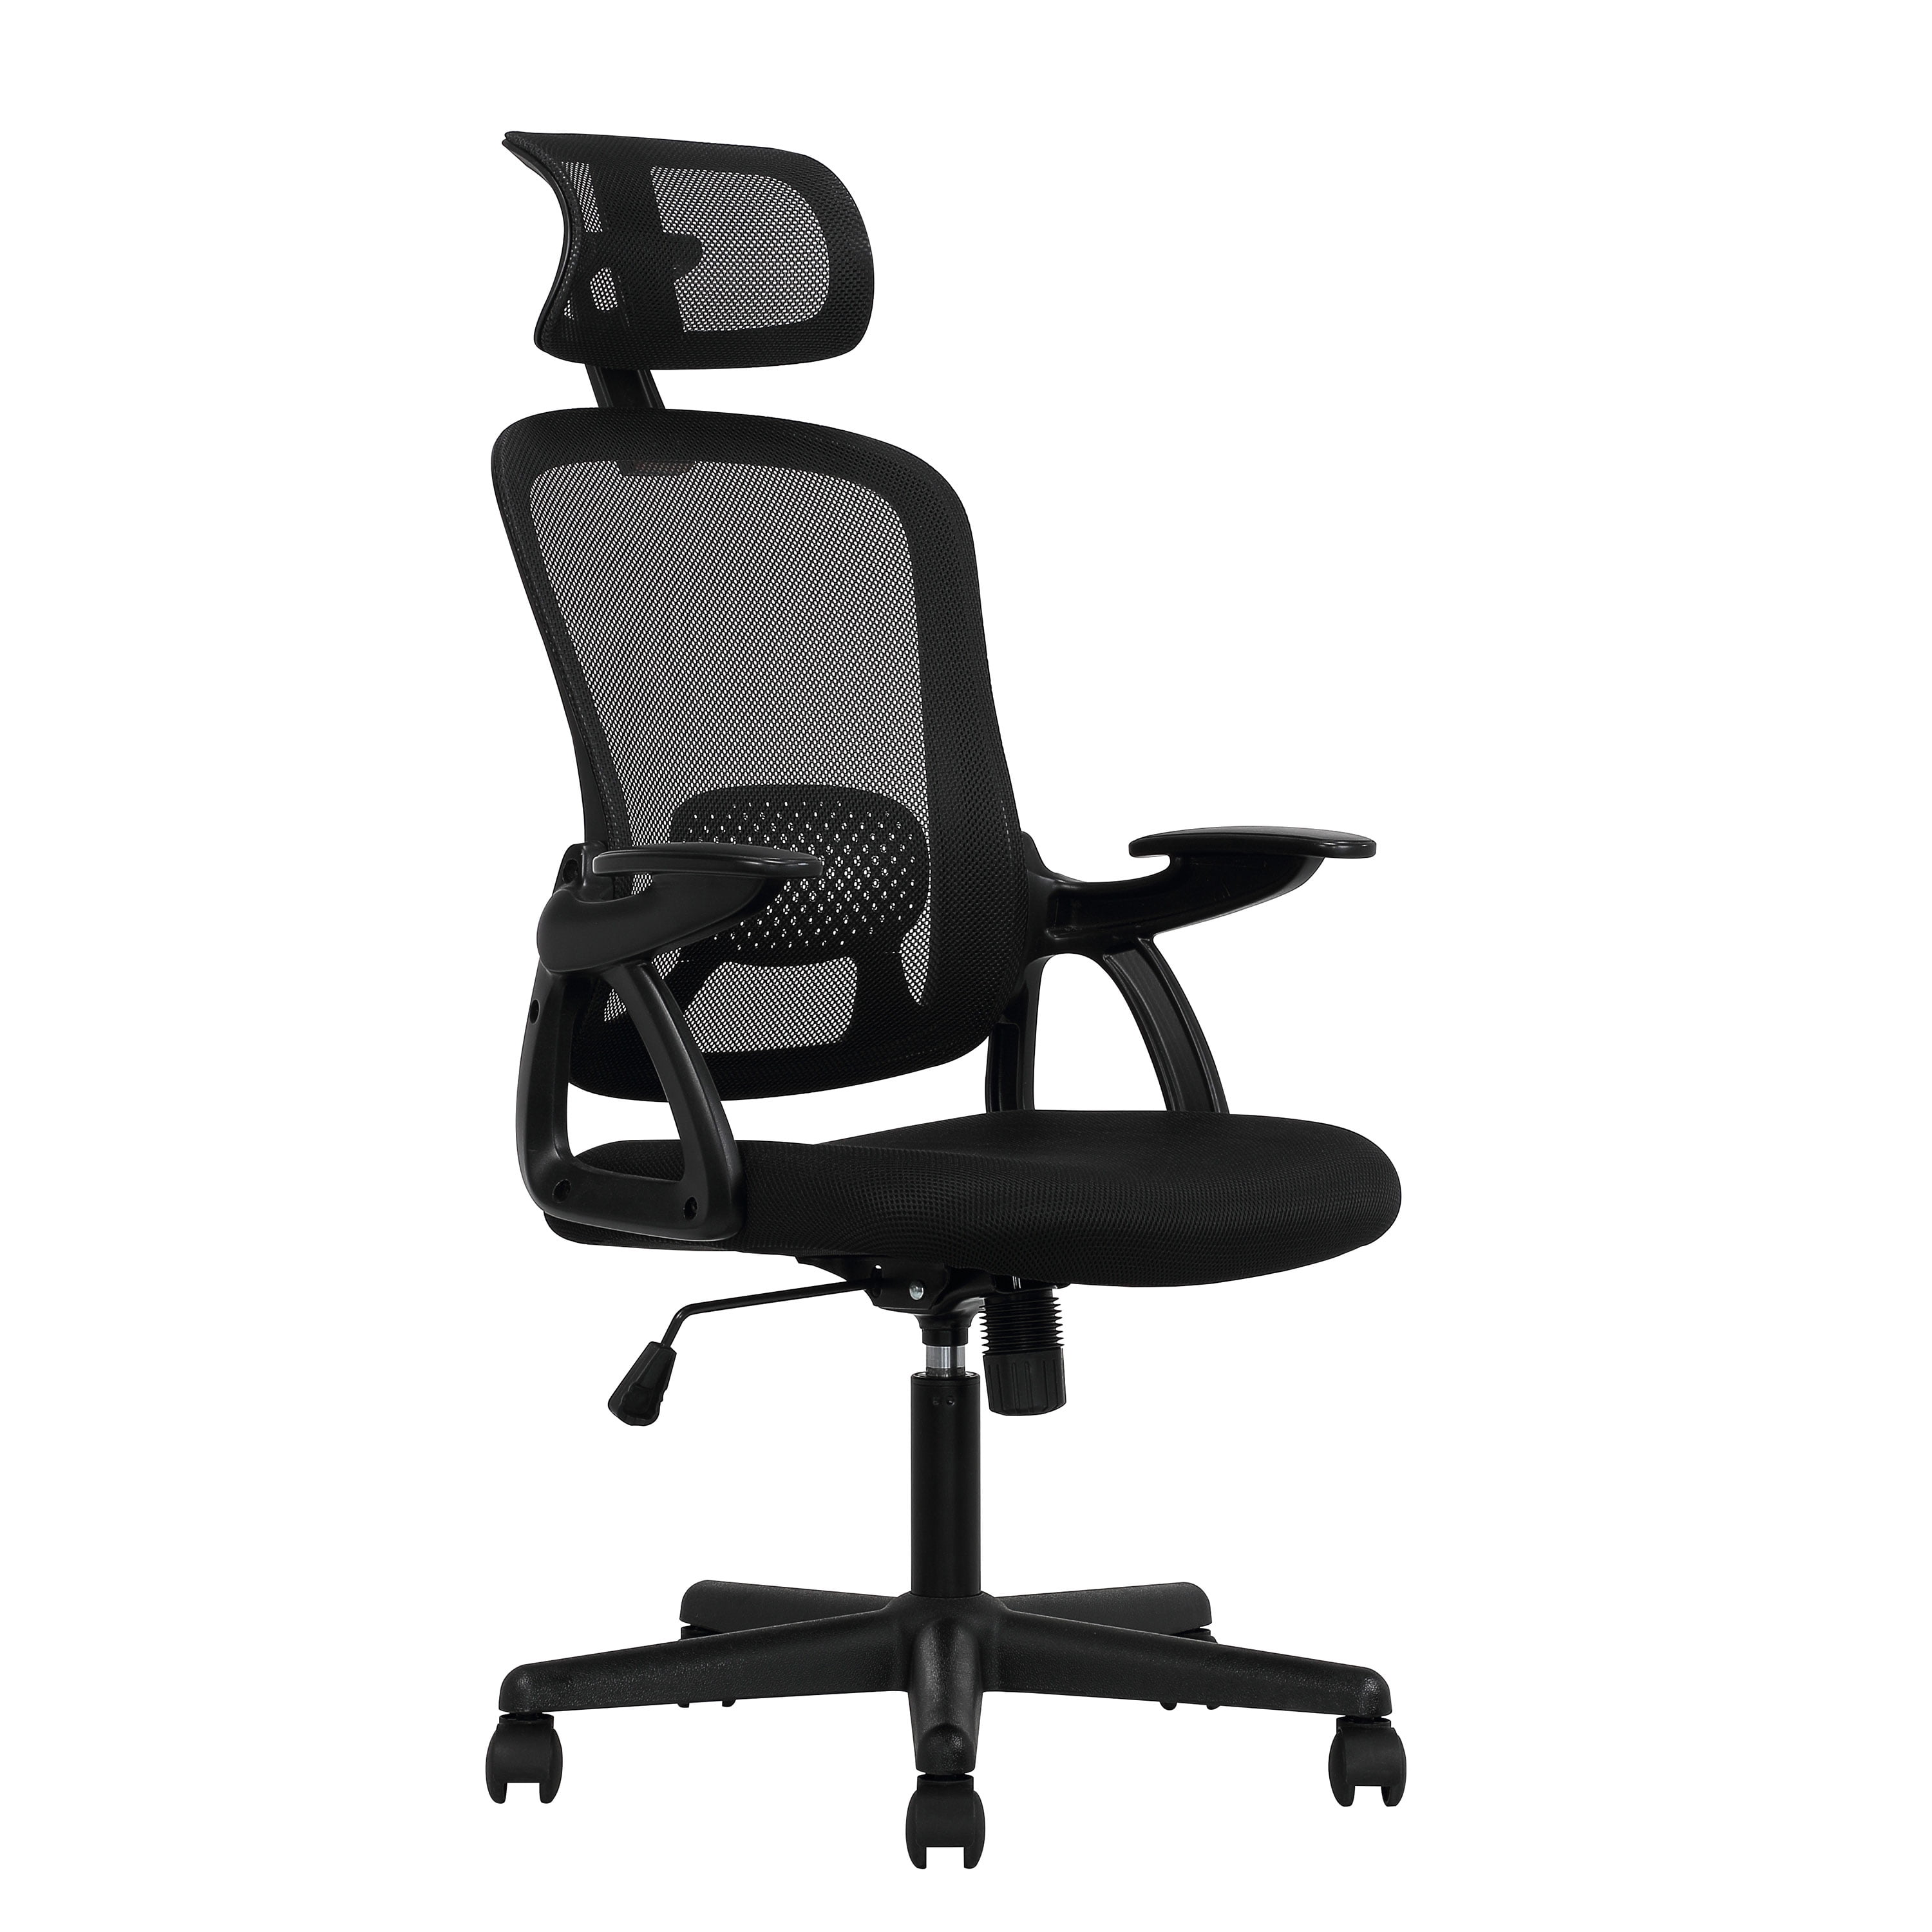 Ergonomic Chair Under 100 | tunersread.com